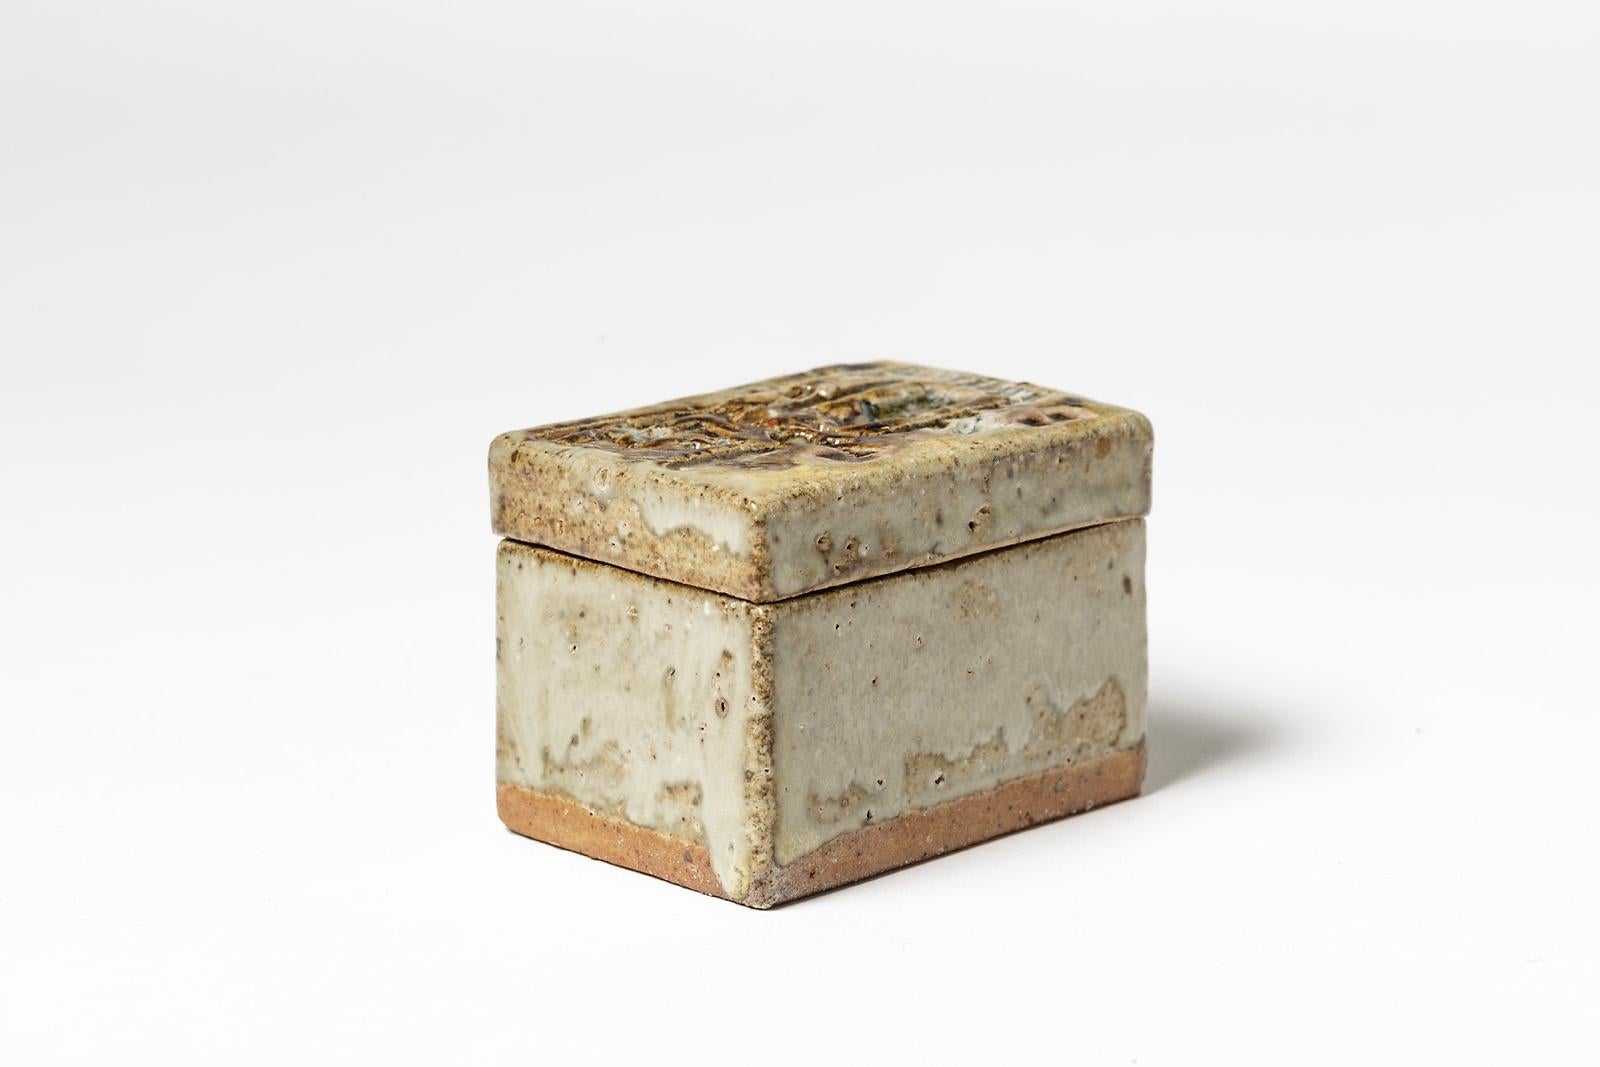 Annie Maume

French precious stoneware ceramic box with architectural design.

Signed under the base, MAUME SANCERRE.

French, 1970s ceramic.

Dimensions : 6 x 8.5 x 5.5cm.